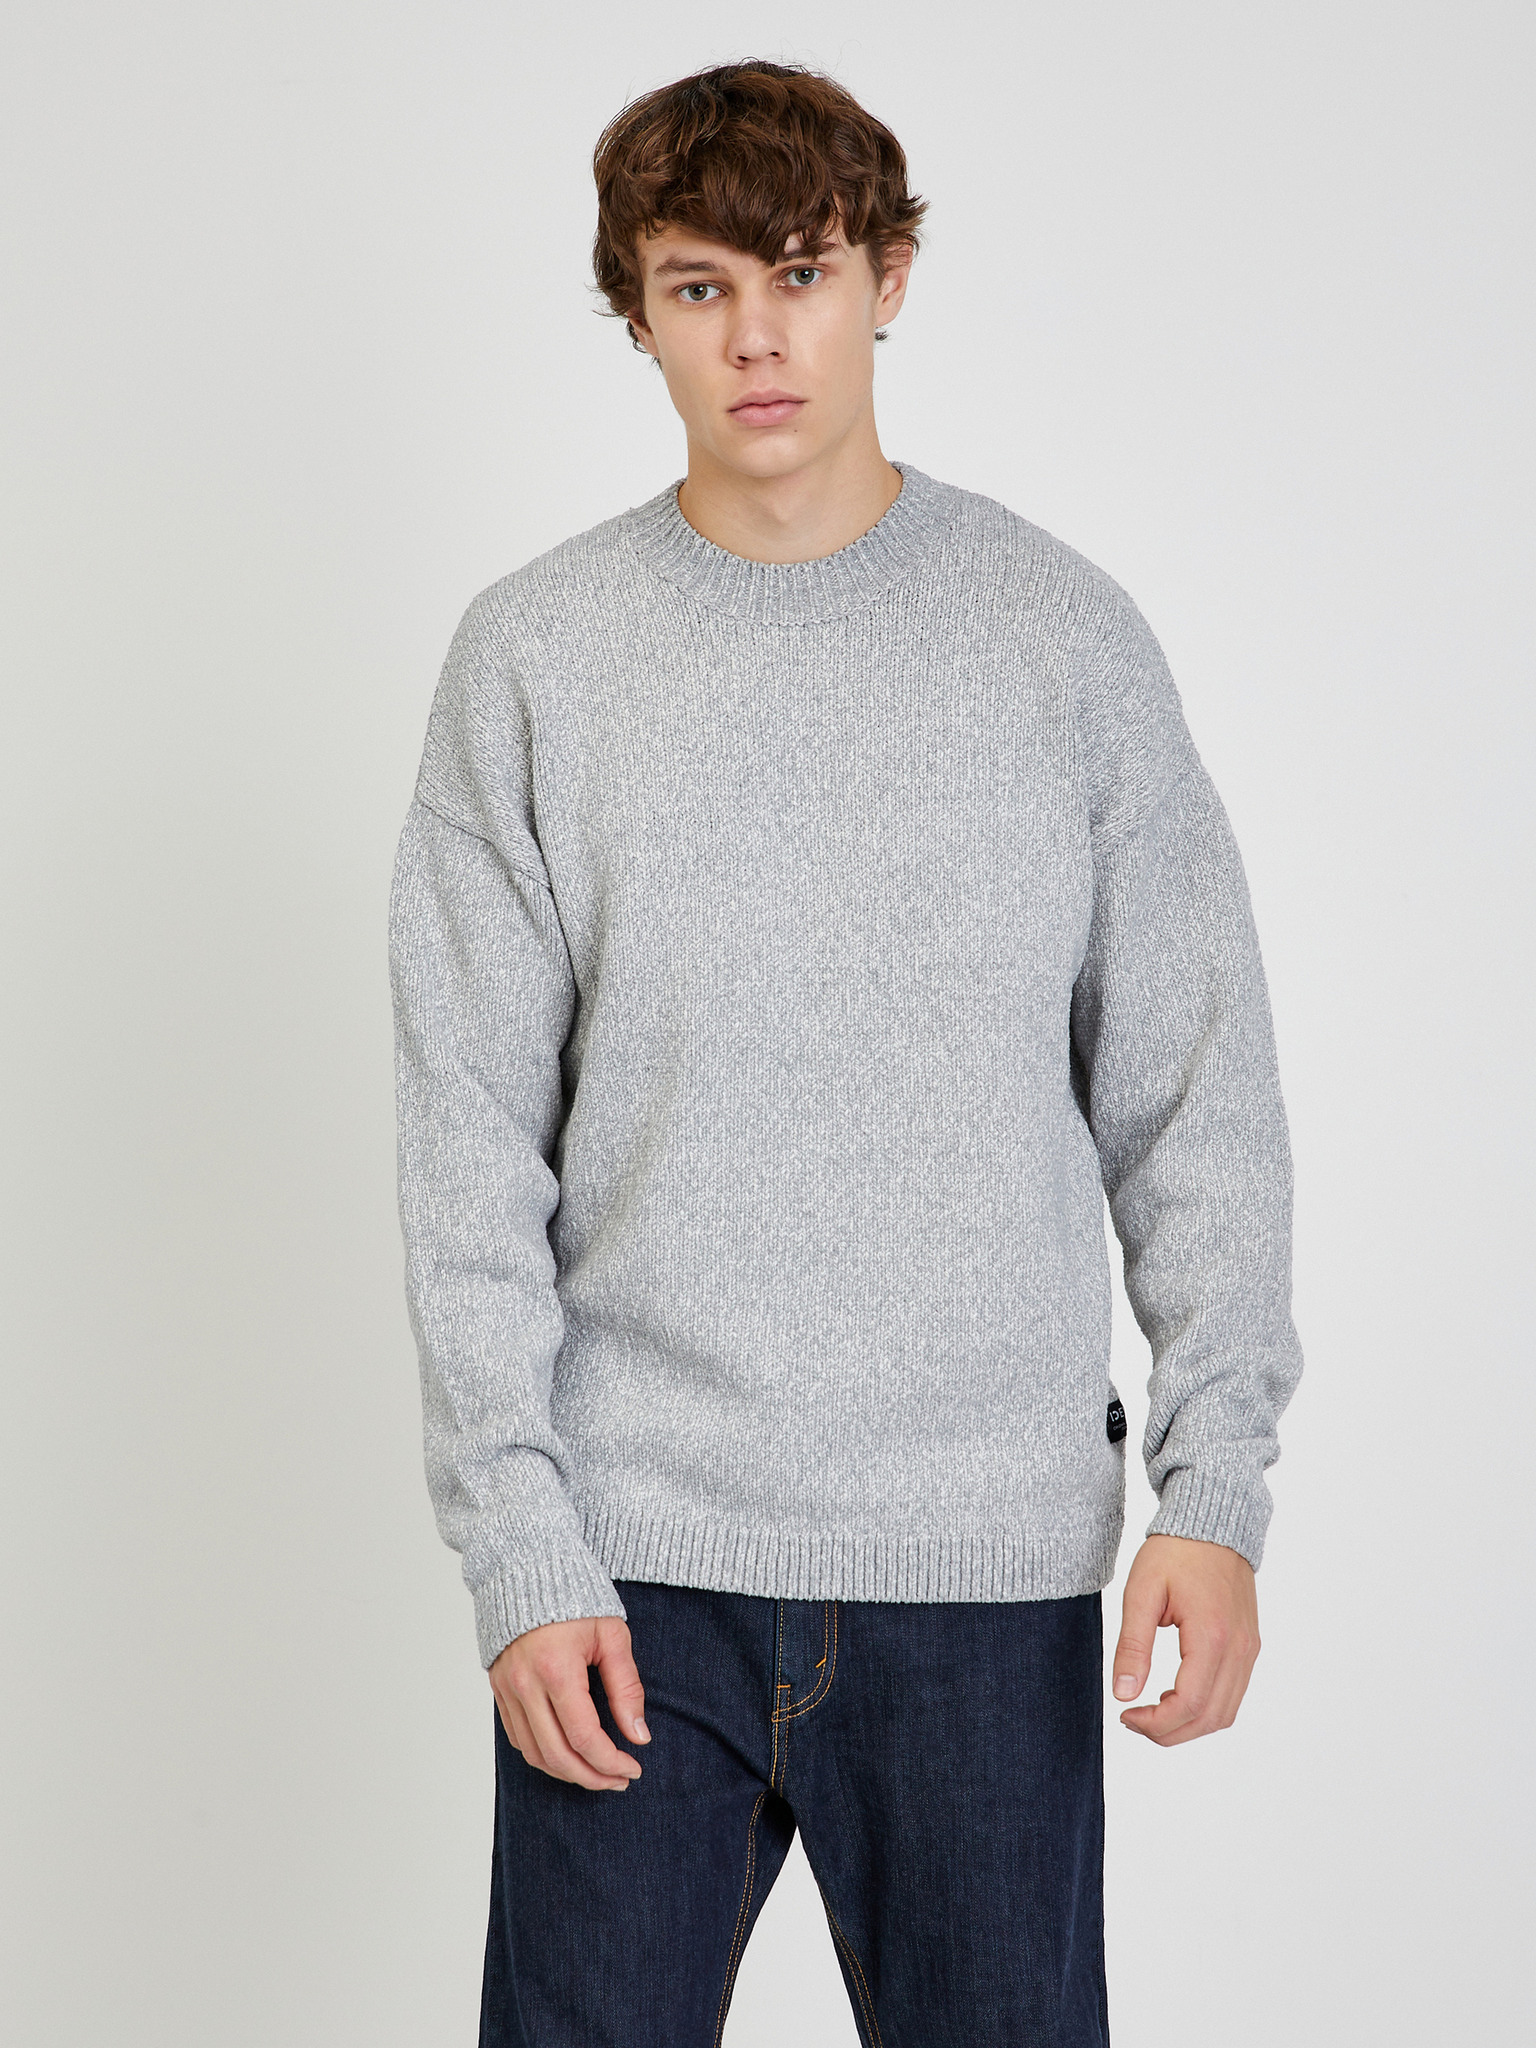 Tom Sweater Denim Tailor -